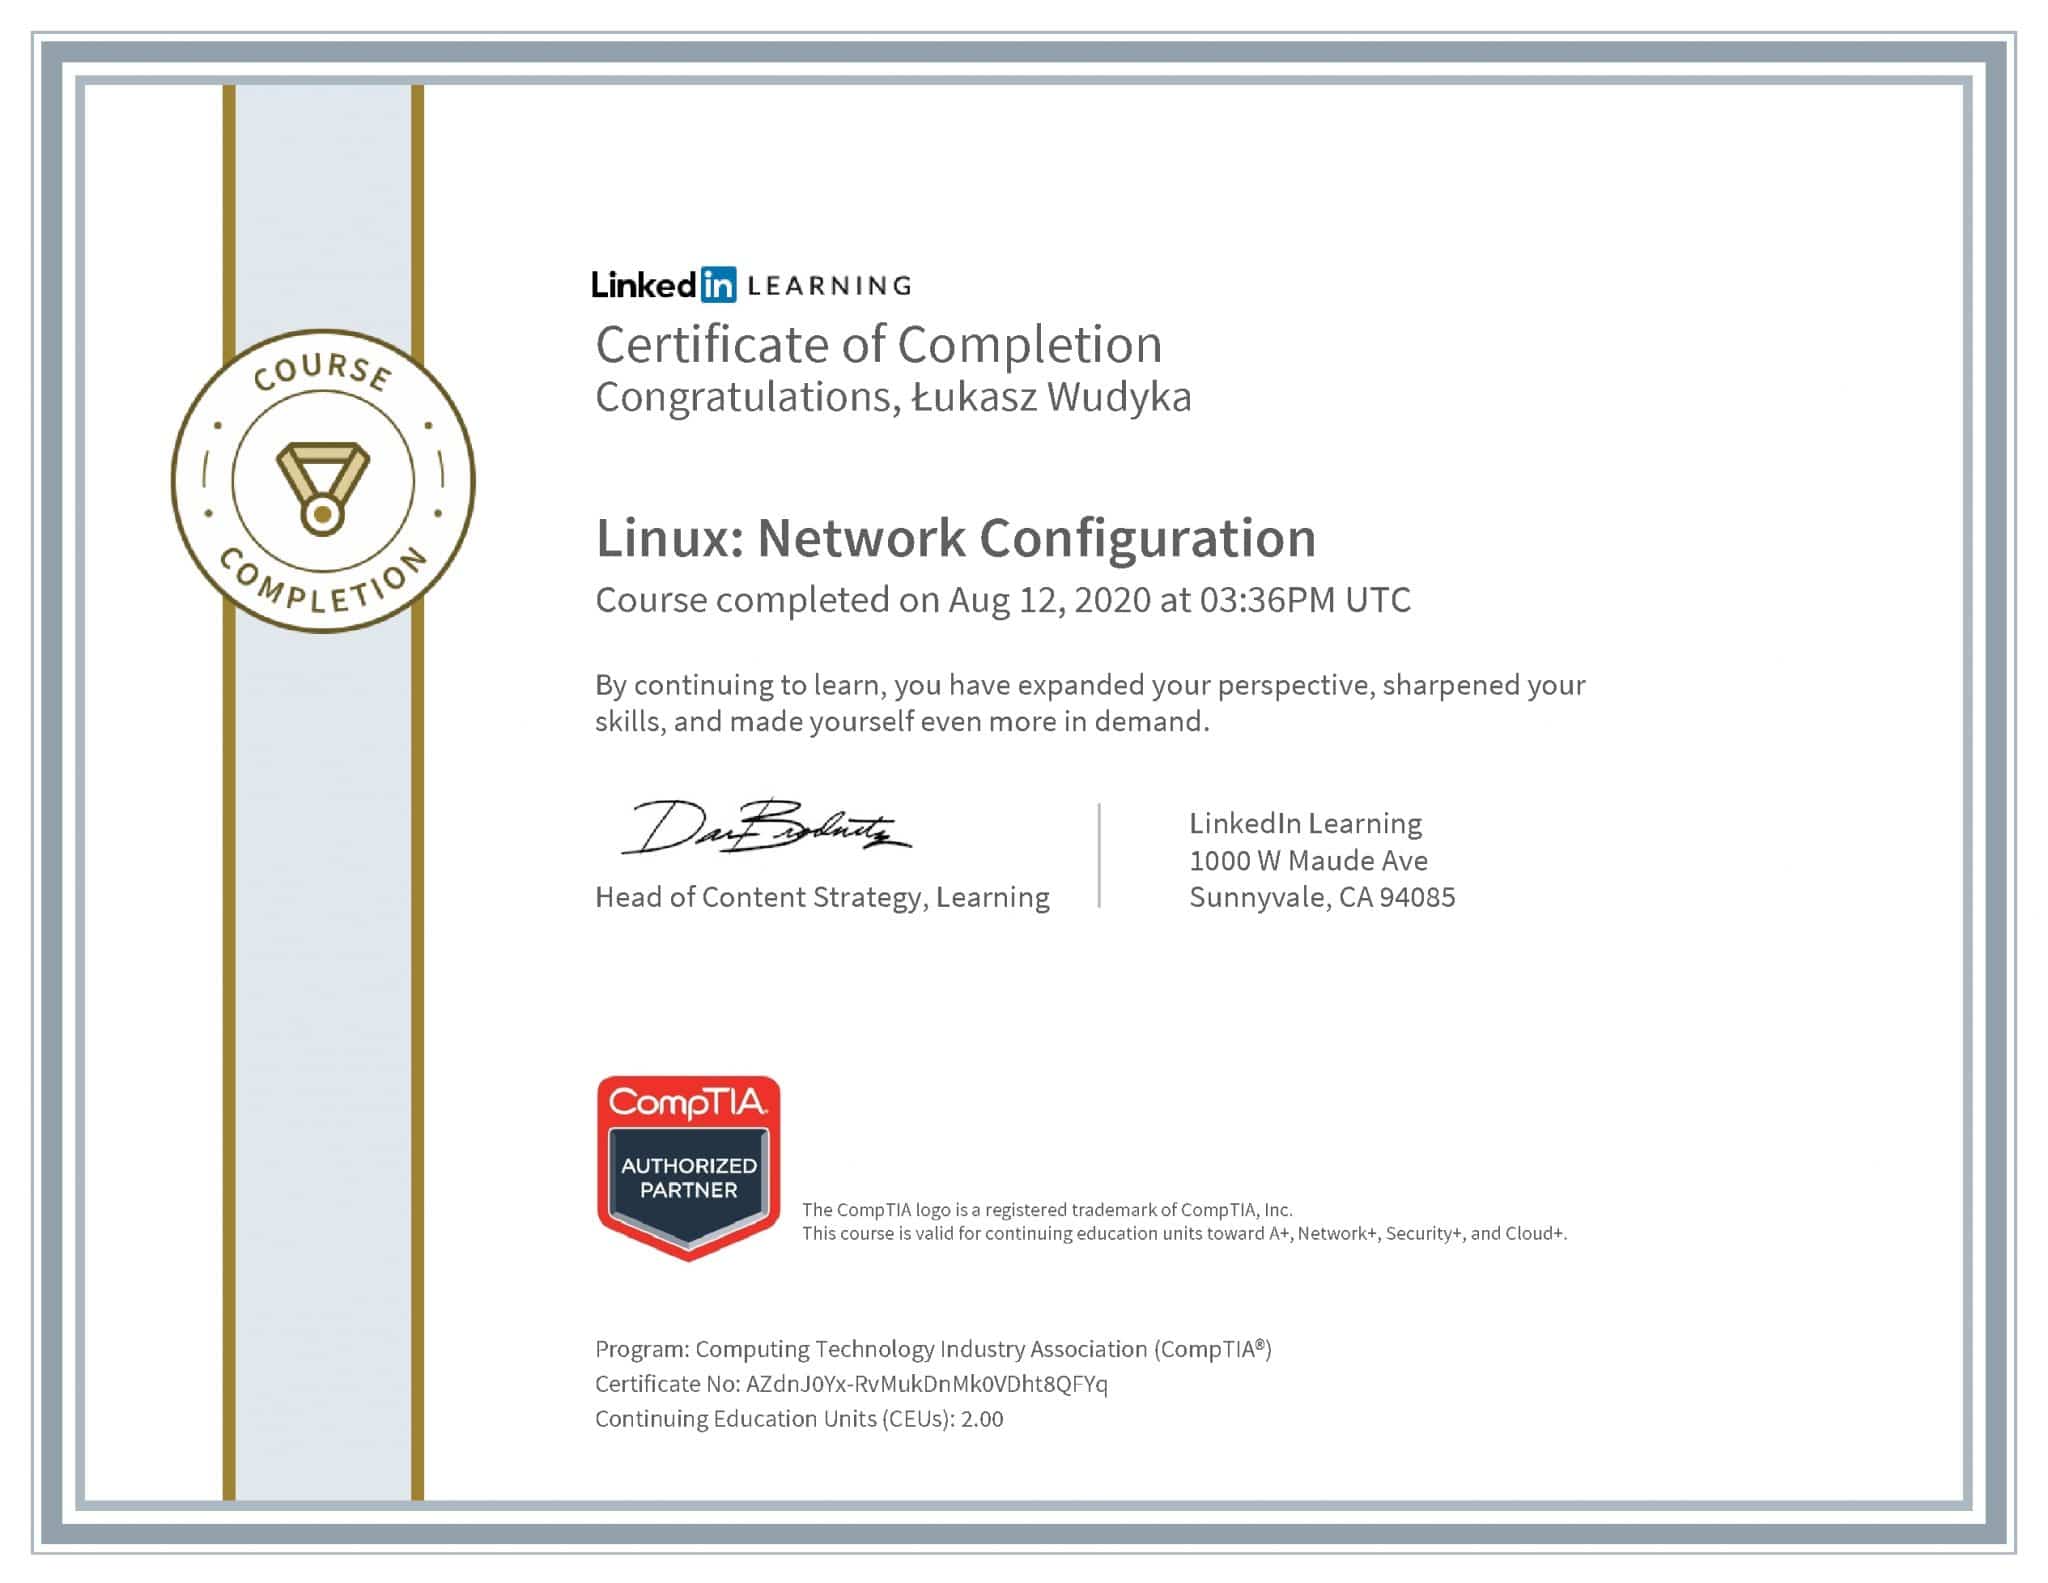 Łukasz Wudyka certyfikat LinkedIn Linux: Network Configuration CompTIA